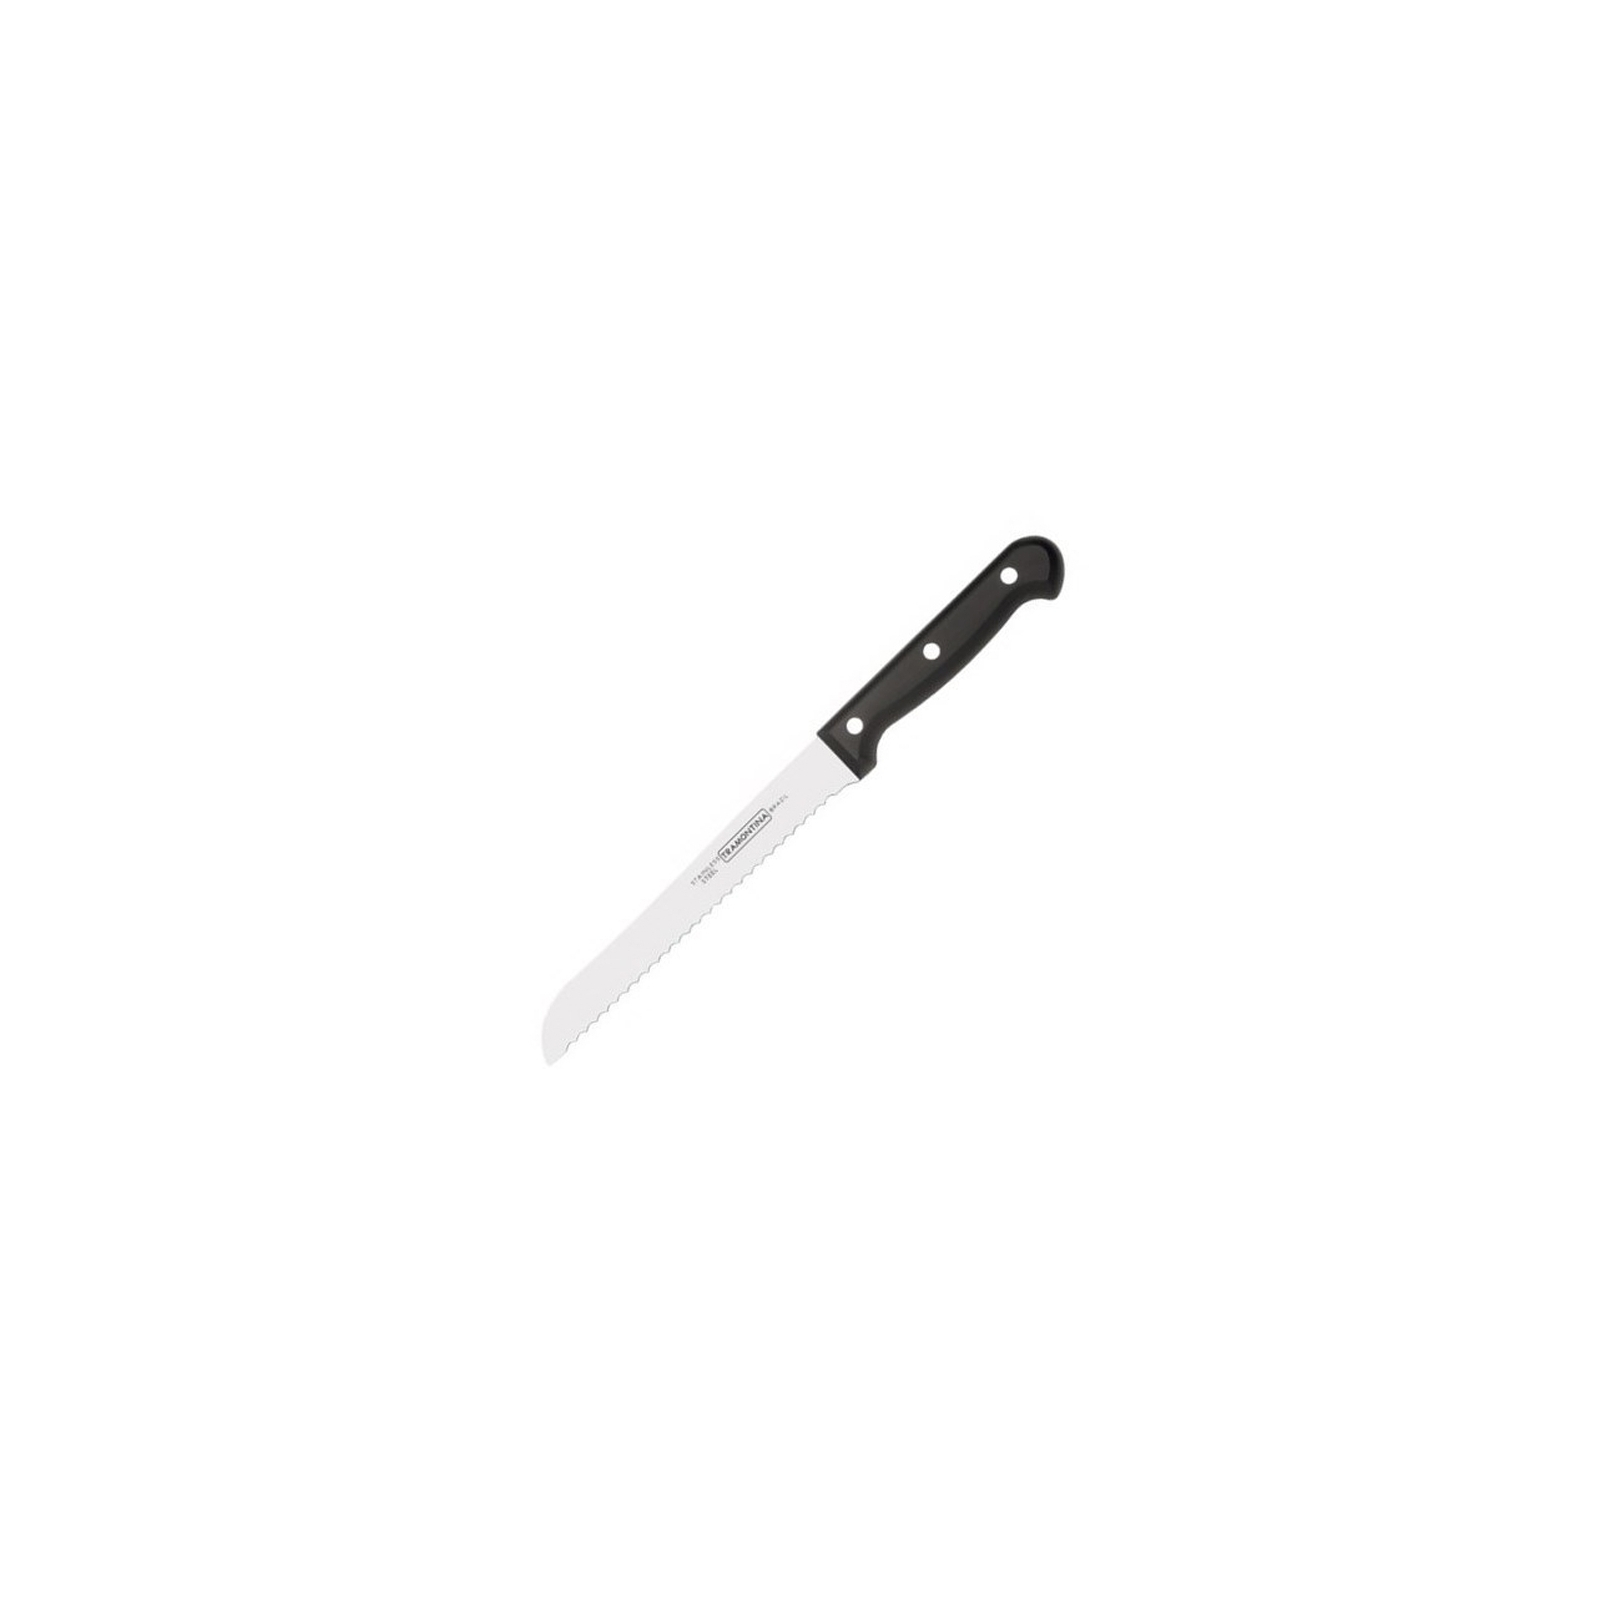 Кухонный нож Tramontina Ultracorte для хлеба 178 мм (23859/107)